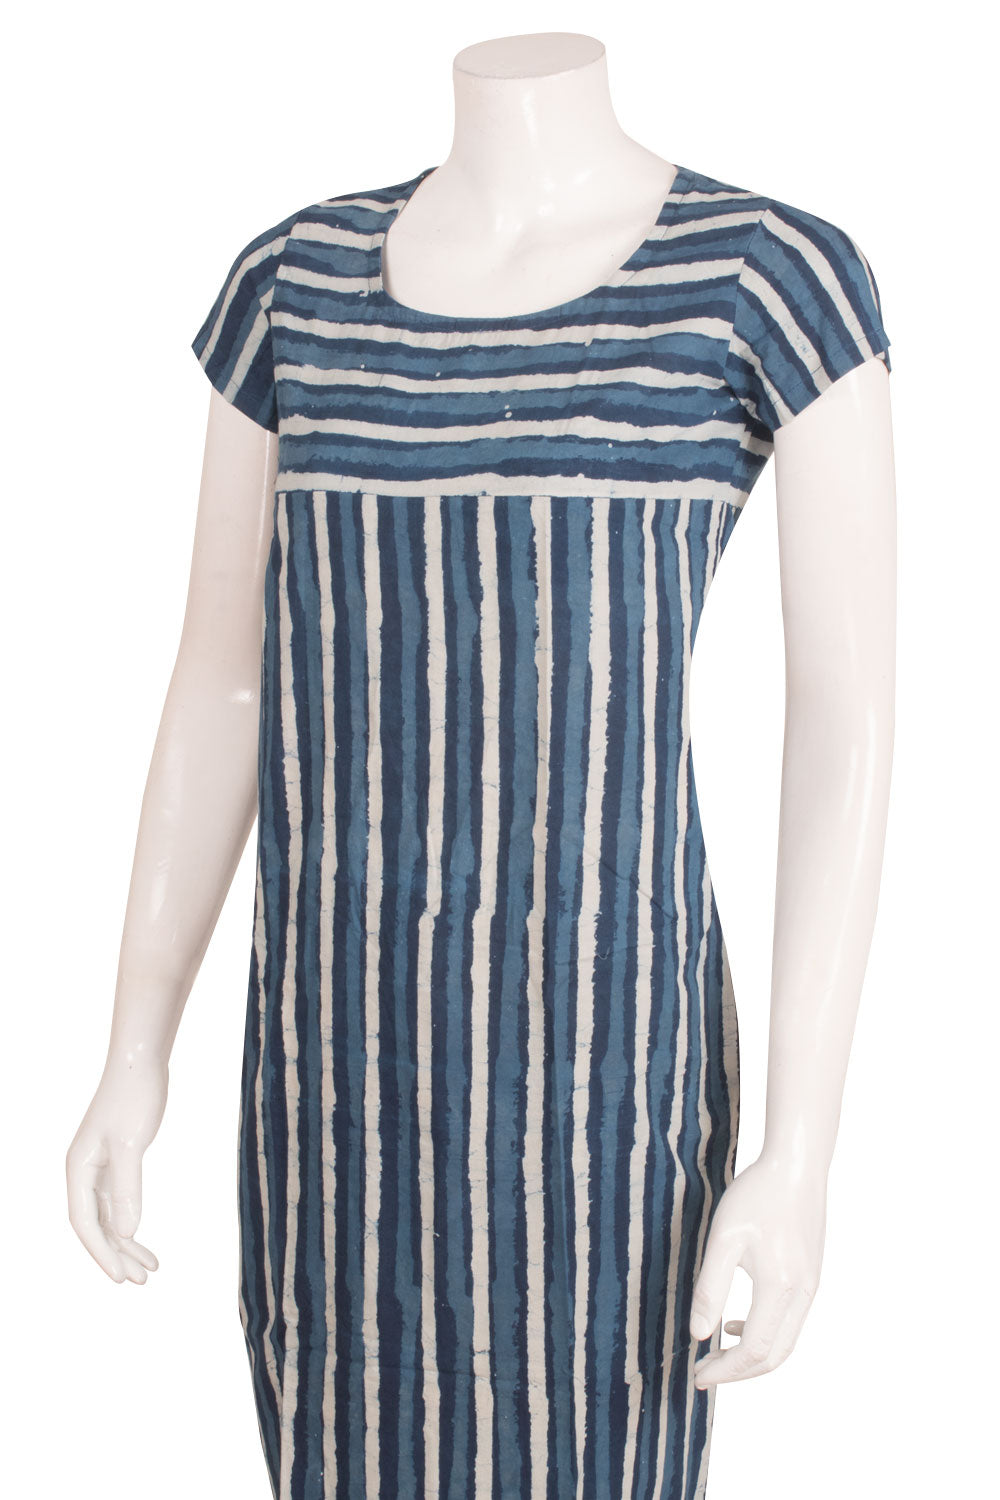 Dabu Printed Knee Length Cotton Dress with Stripes Design